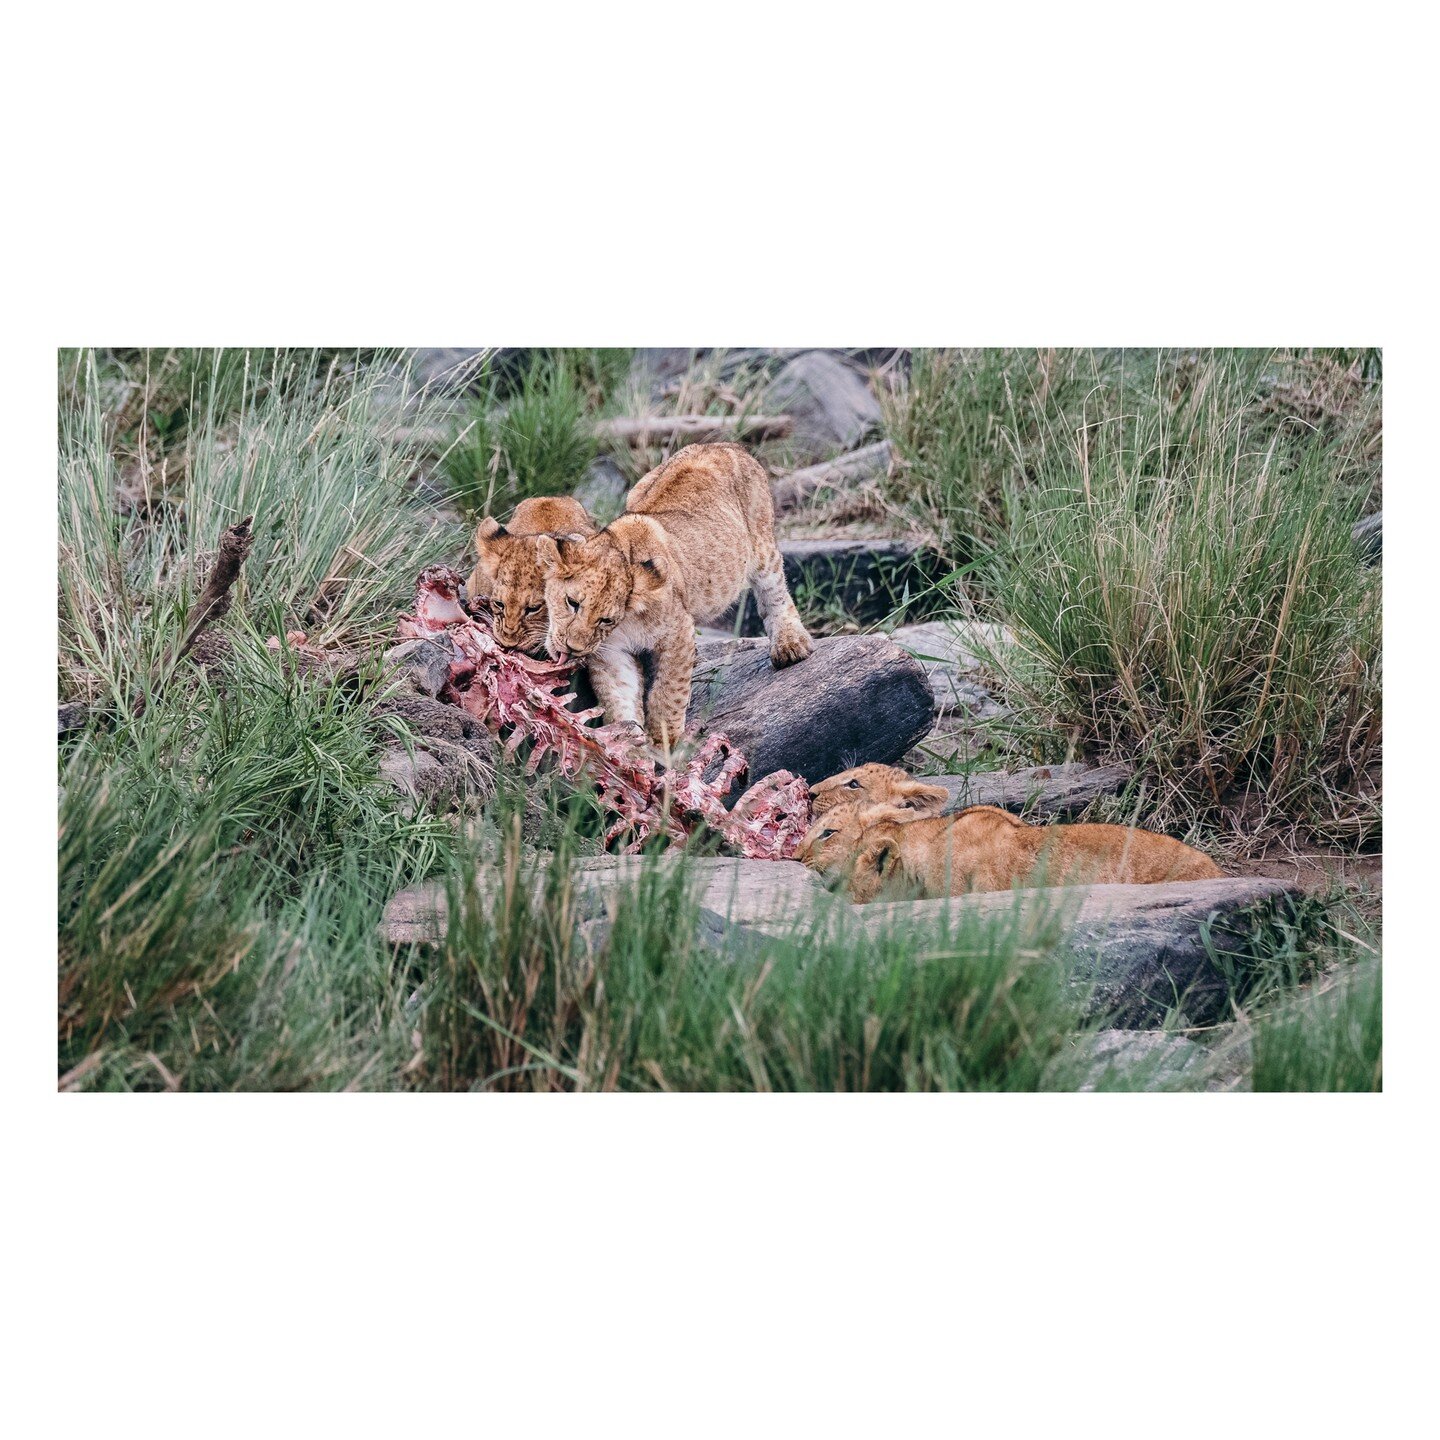 🦁🍗 Masai Mara #lion #wildlife #lionking #lions #animals #nature #africa #king #lioness #photography #safari #wildlifephotography #animal #bigcats #cat #naturephotography #kenya #masaimara #photosafari #wildlifephotographer #wildlifeaddicts #ig_wild